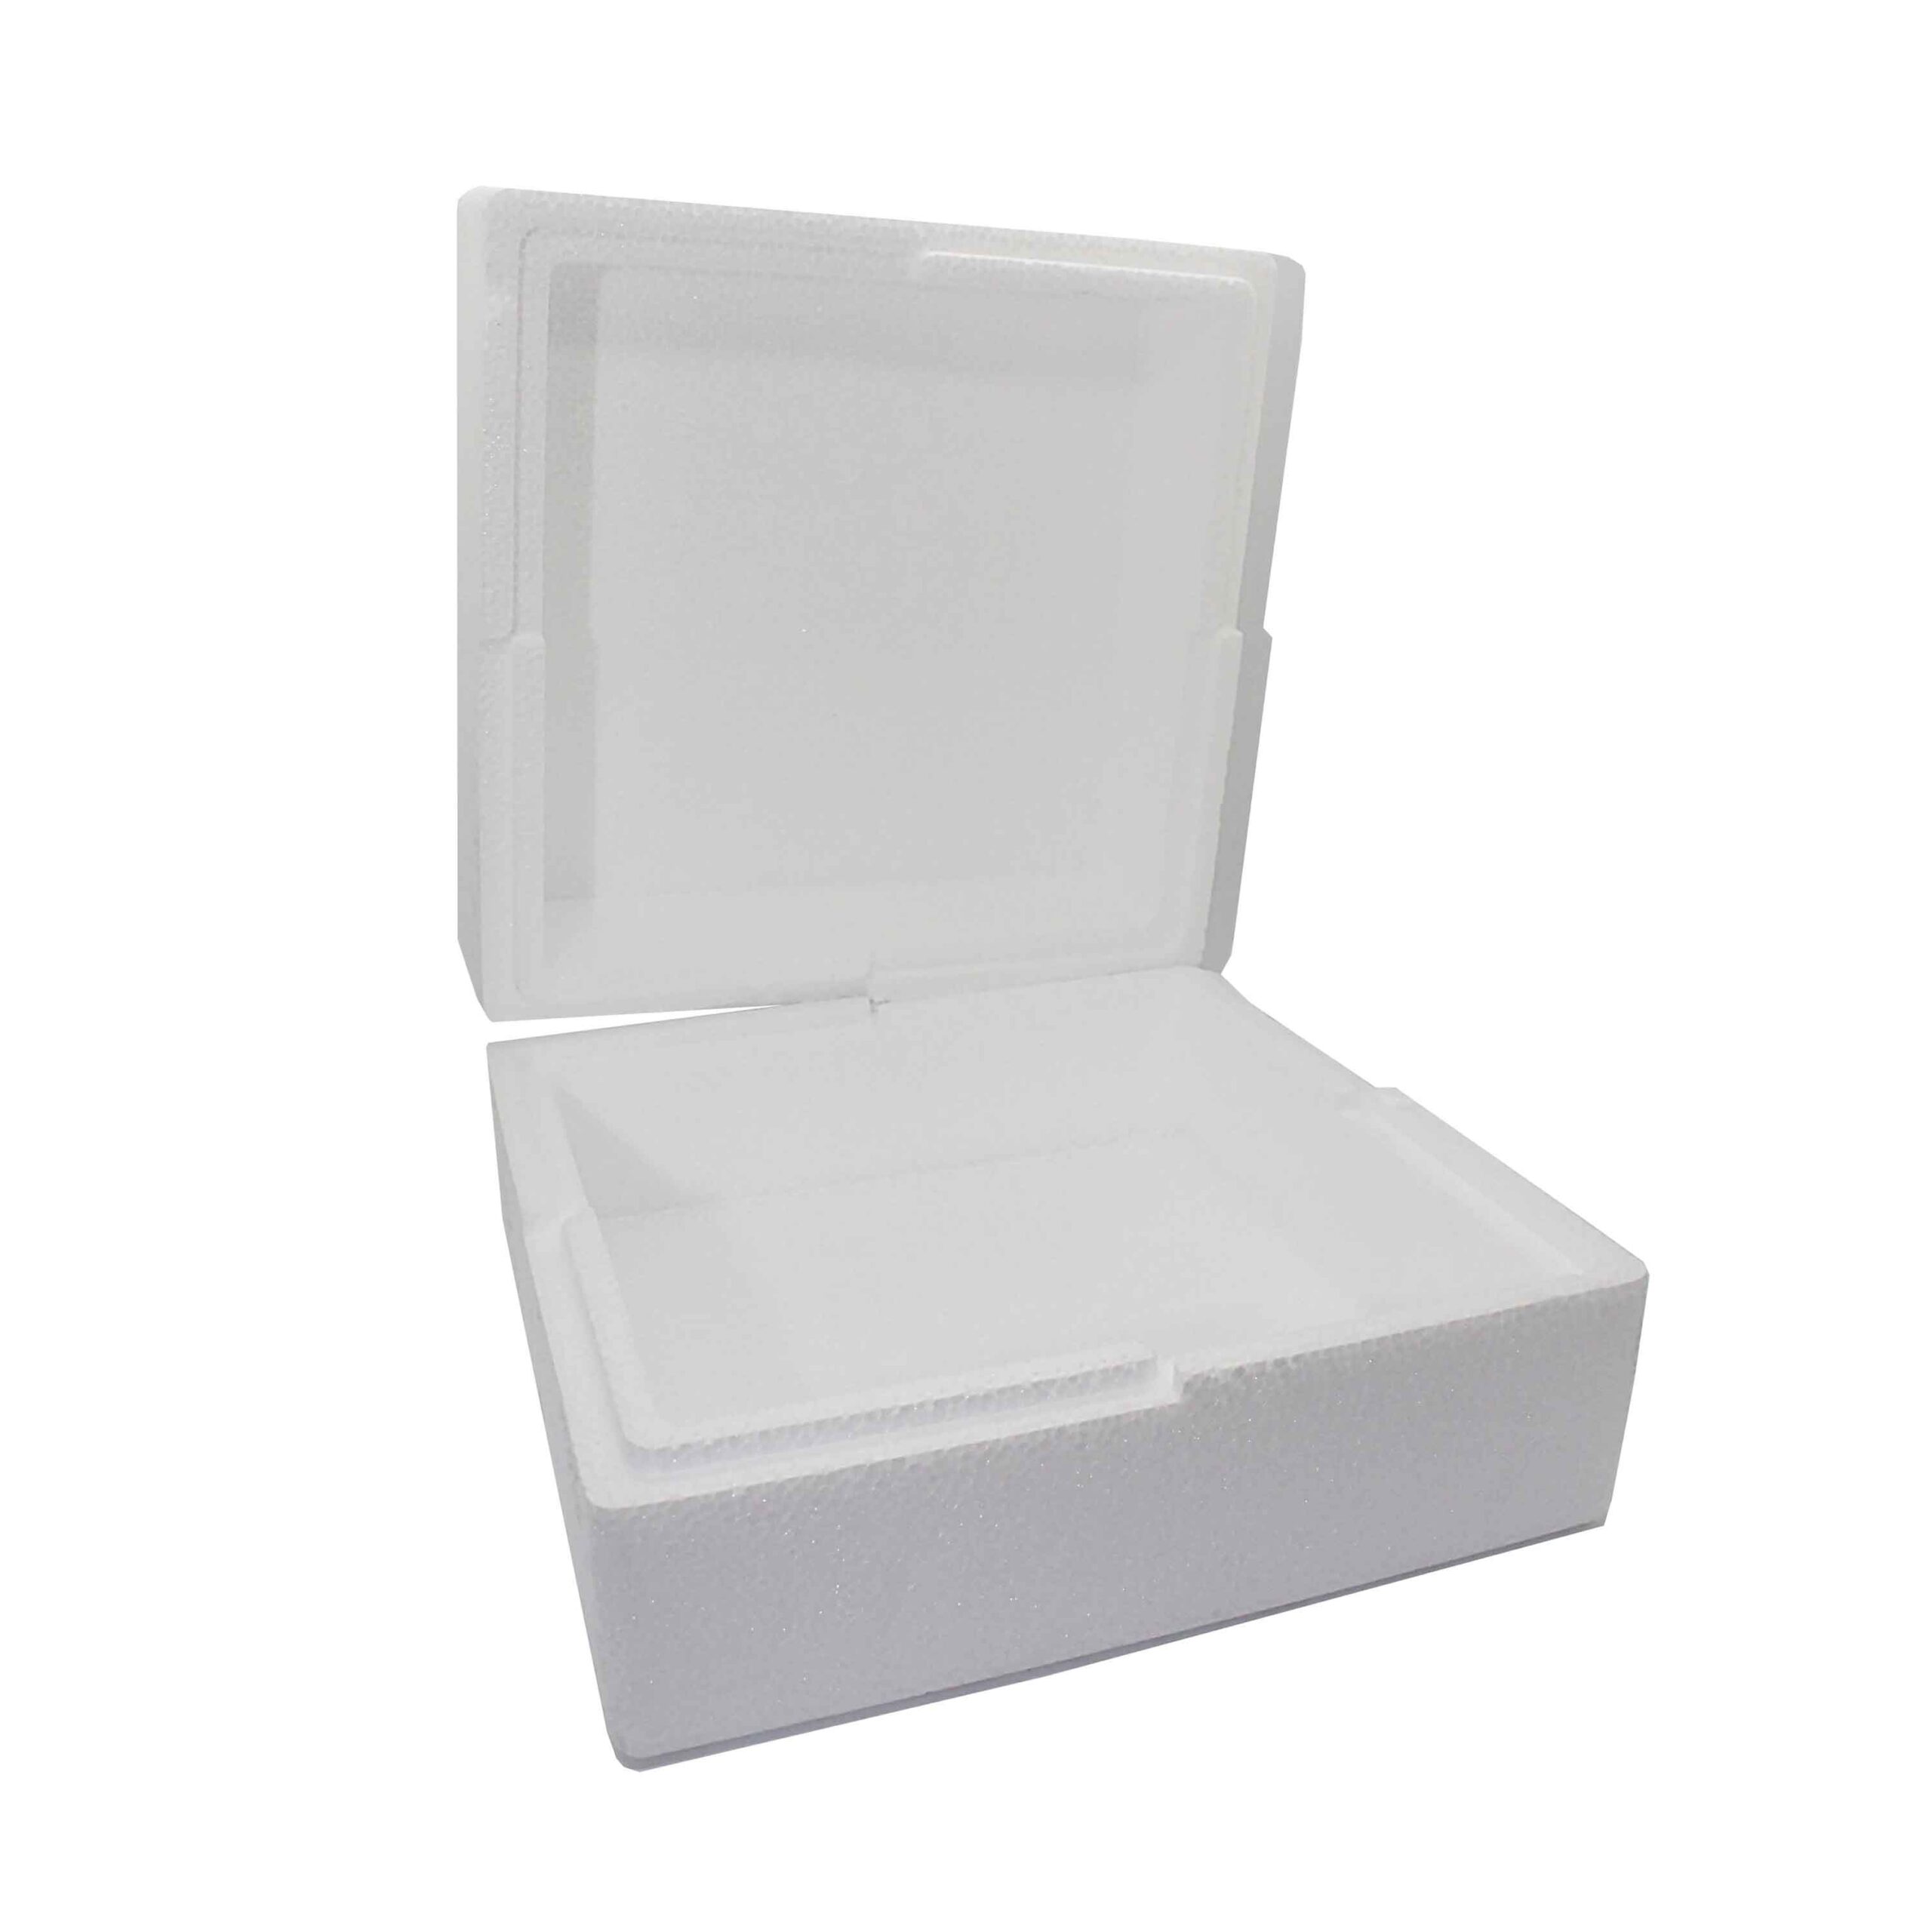 POLYSTYRENE ICE
CREAM BOX 16.5 x
16.5 x 9.5cm